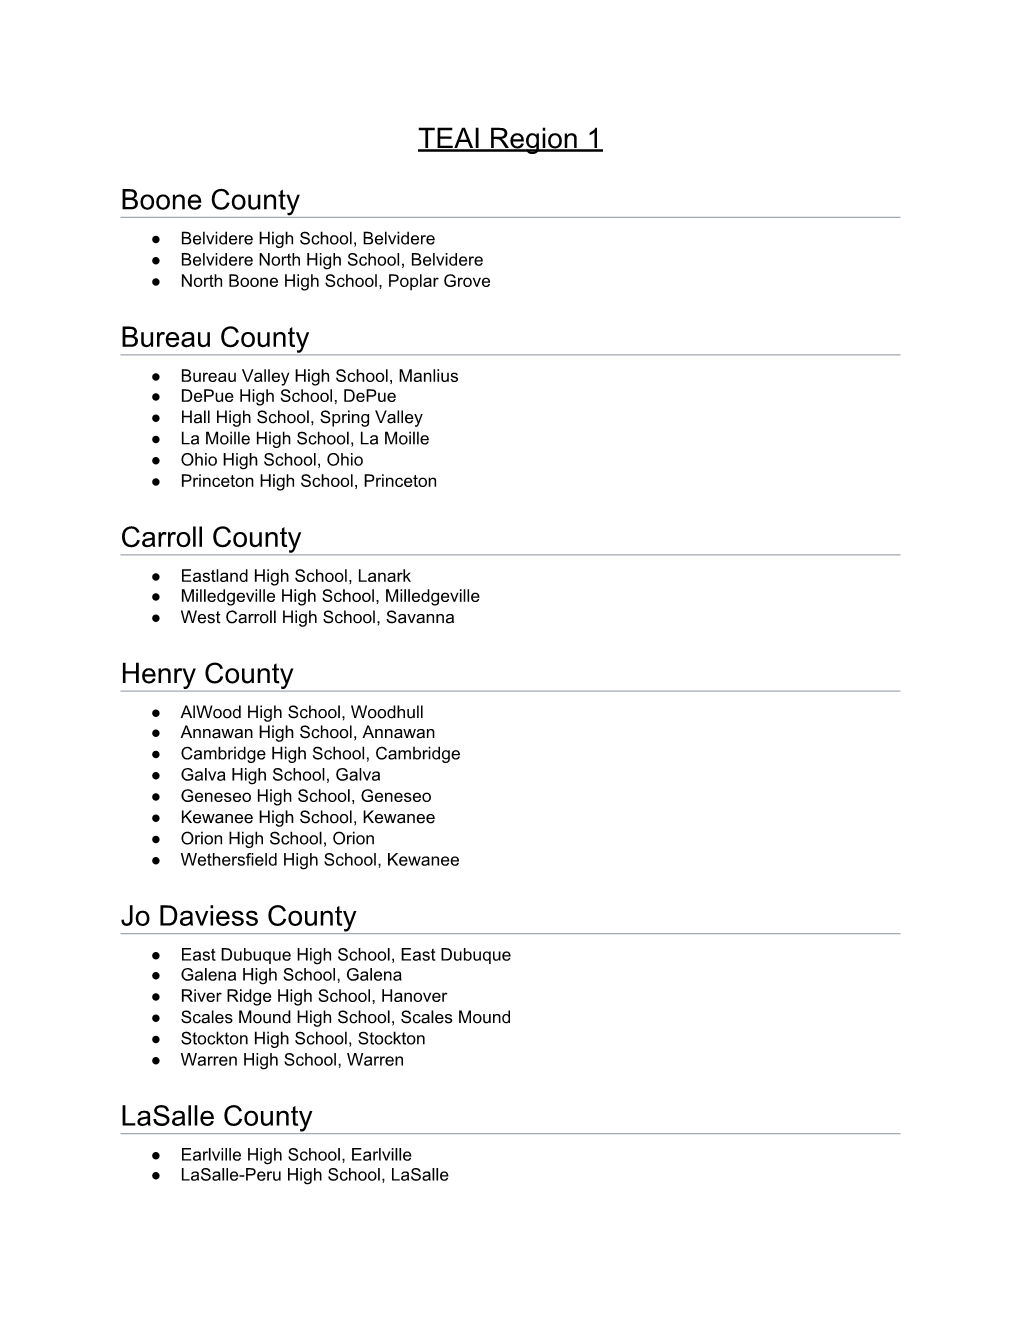 TEAI Region 1 Boone County Bureau County Carroll County Henry